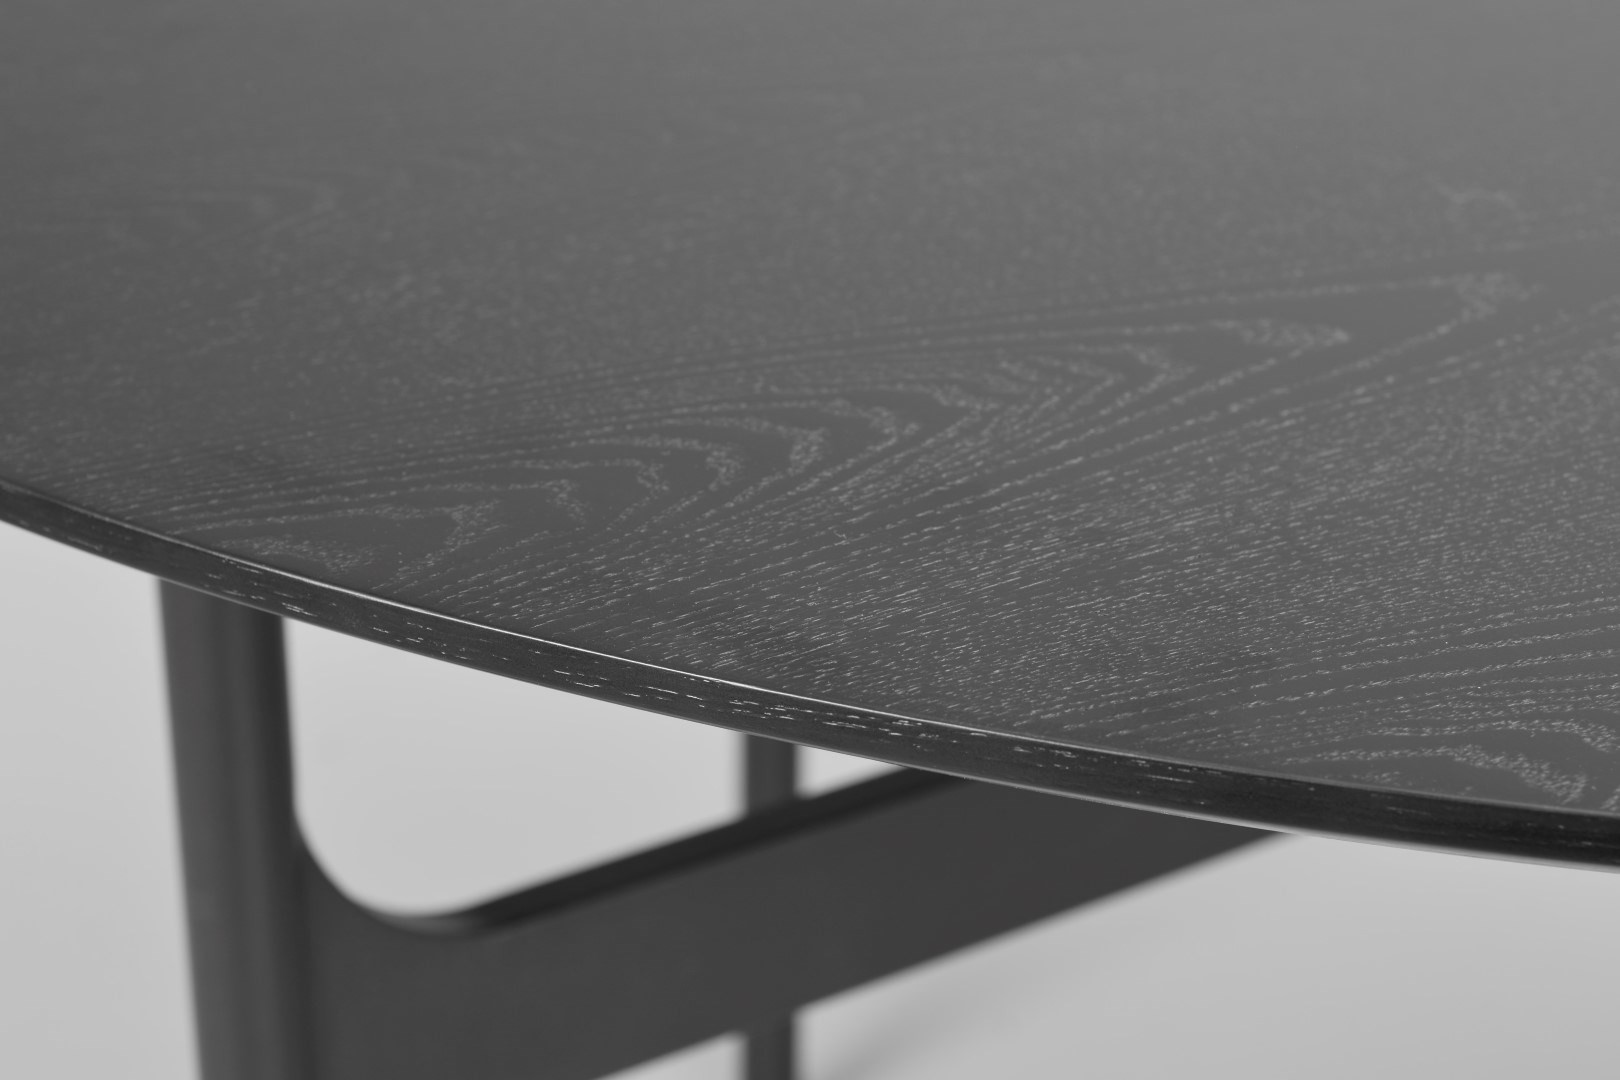 Stół Colton 135x135 cm, czarny